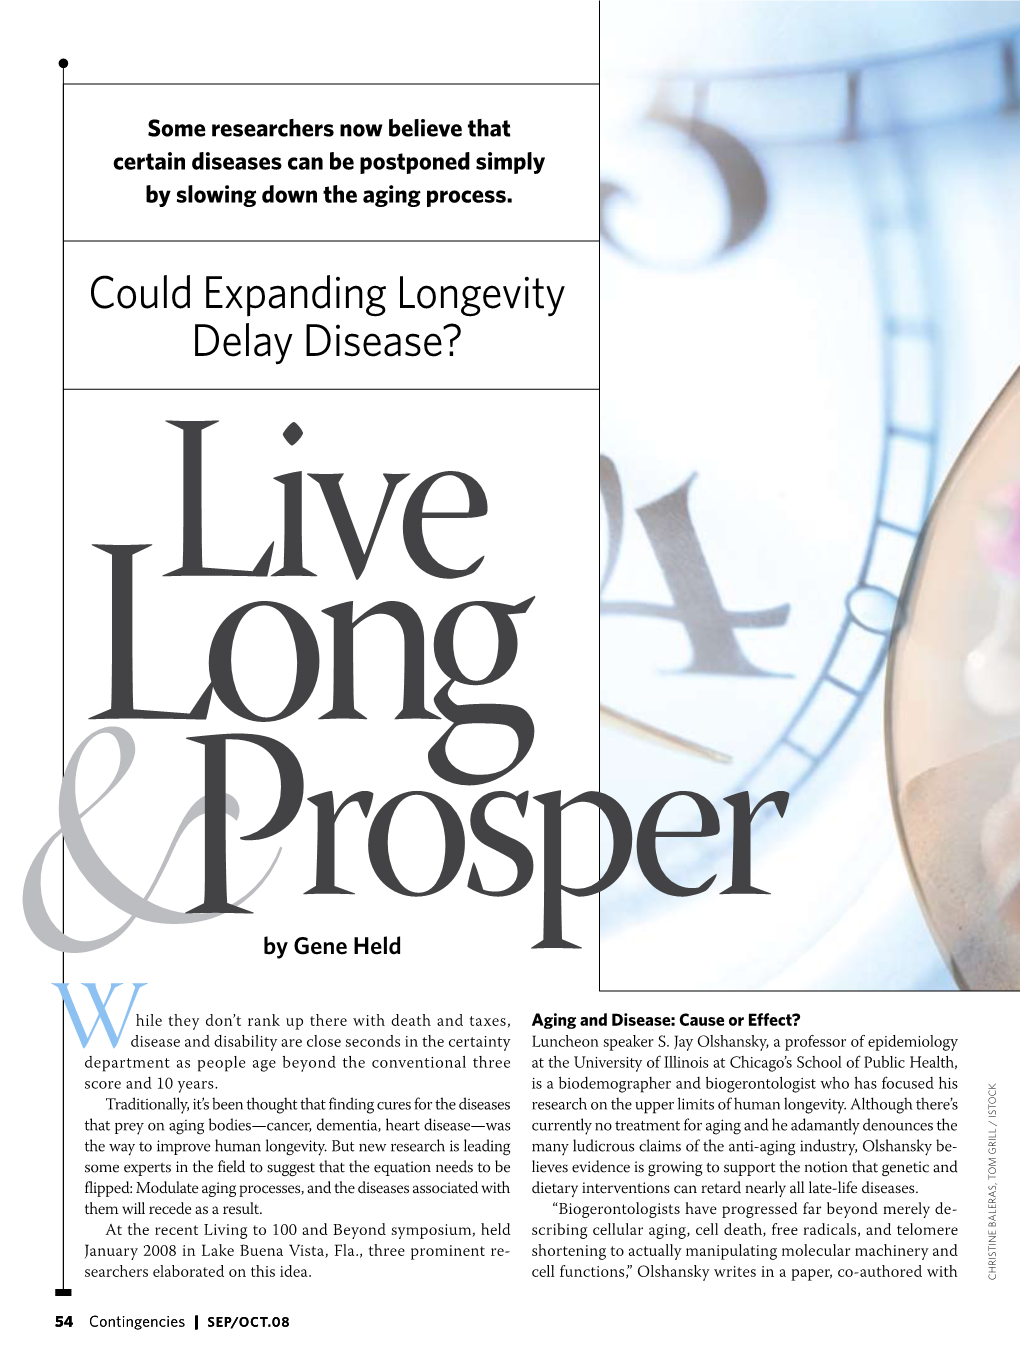 Could Expanding Longevity Delay Disease? Live Long